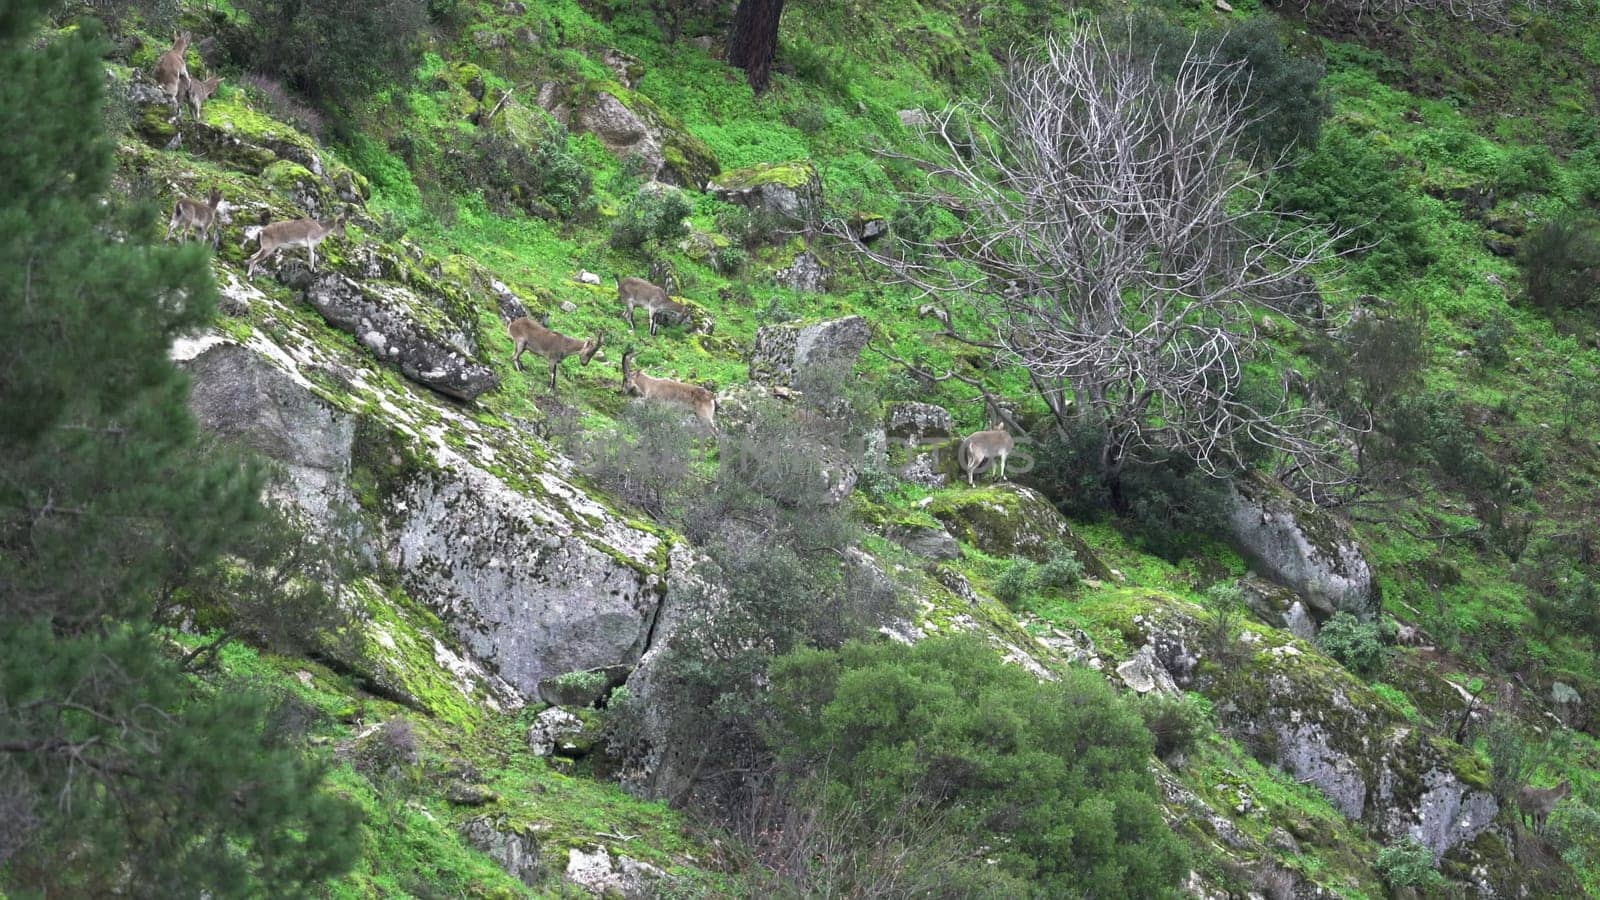 Herd of Wild Mountain Goats Clashing on Rugged Hillside by FerradalFCG